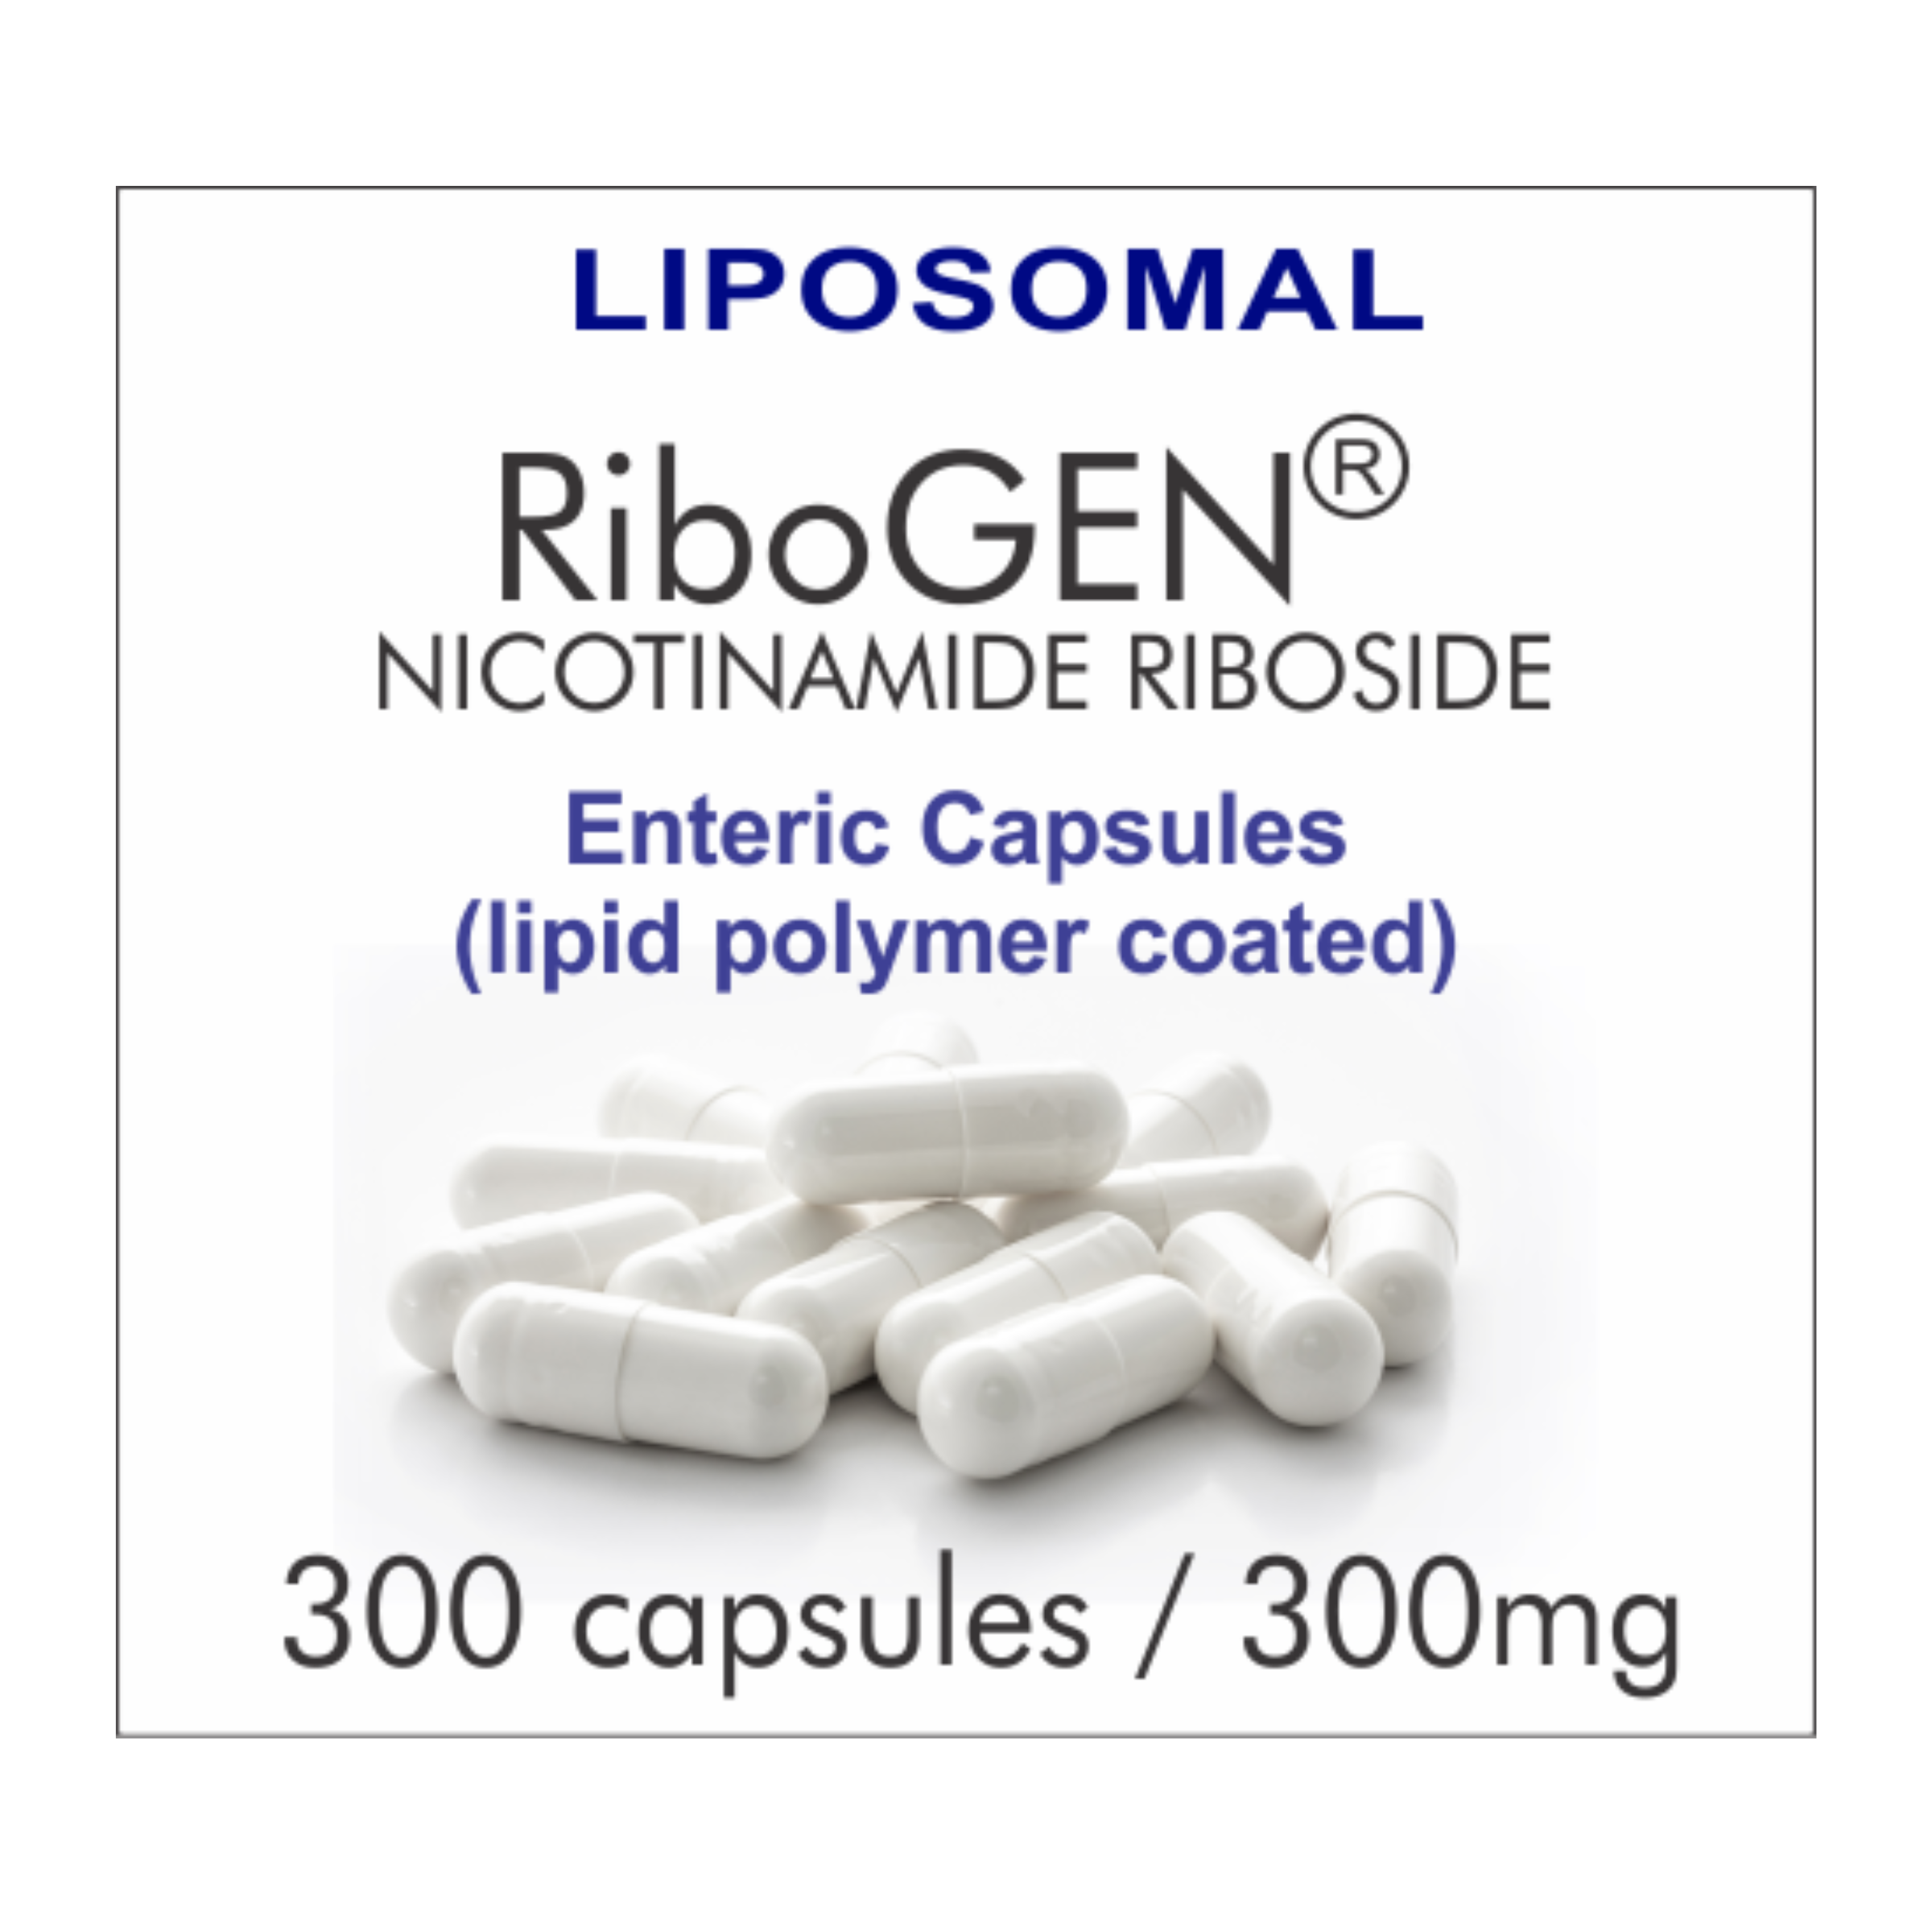 NR 300C INTL ENTERIC (300 capsules), Nicotinamide Riboside (100% RiboGEN) 300mg Vegetarian Capsules for Private Label Supplements